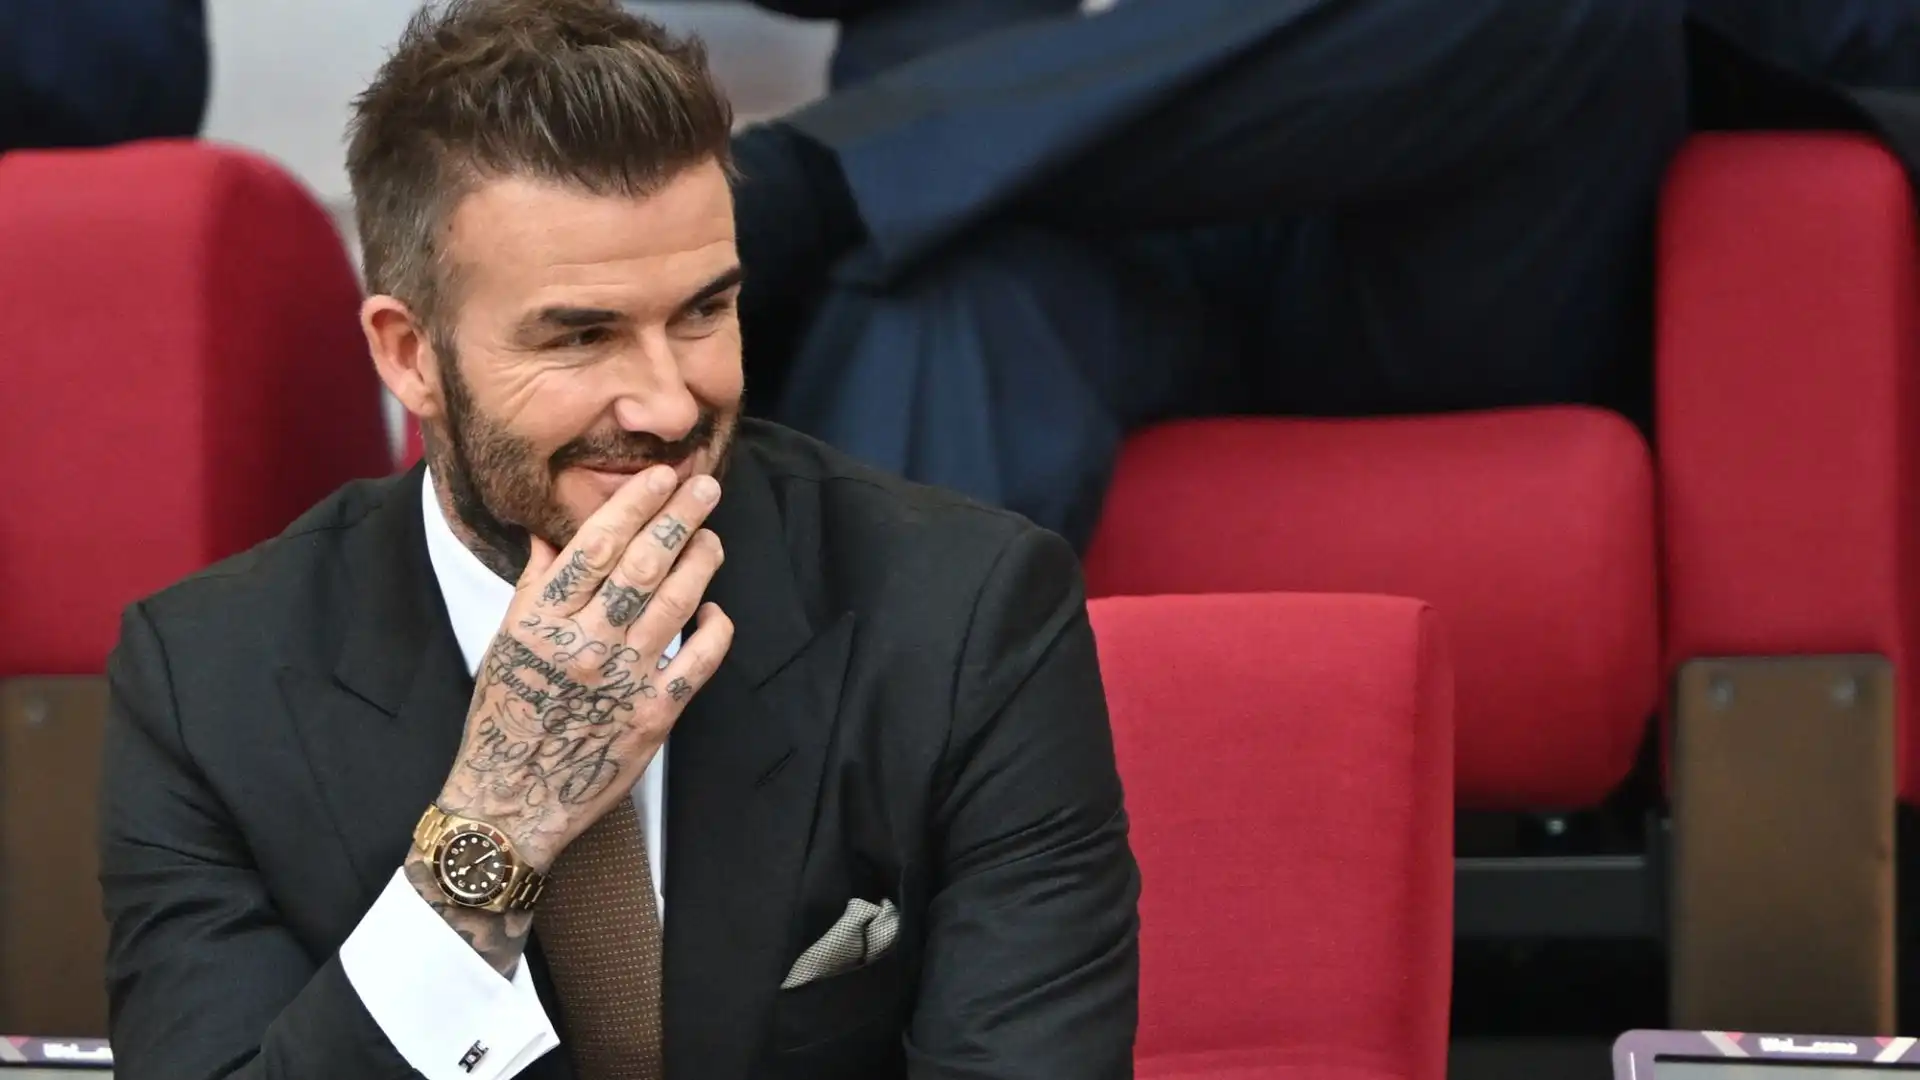 David Beckham (Calcio): patrimonio netto stimato 670 milioni di dollari